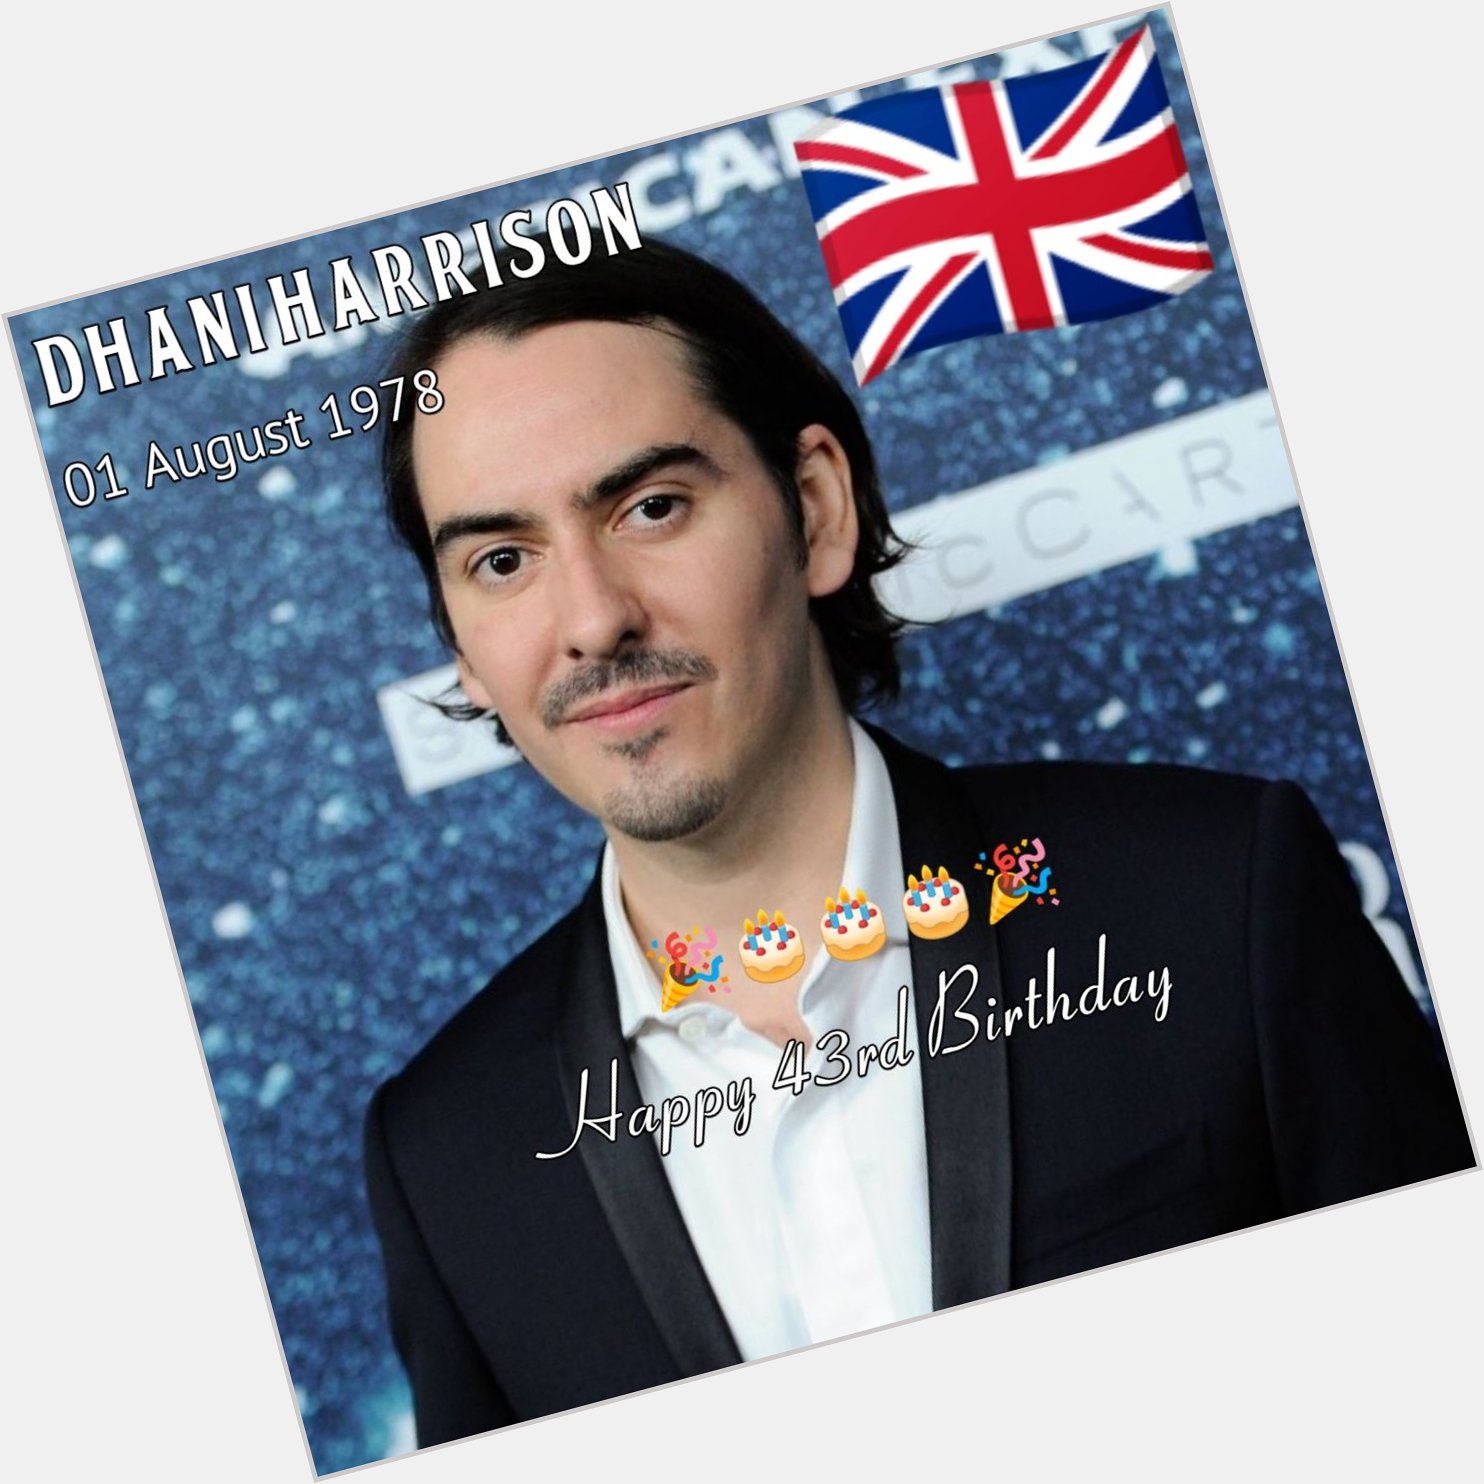   Happy Birthday Child of George Harrison,Dhani Harrison     